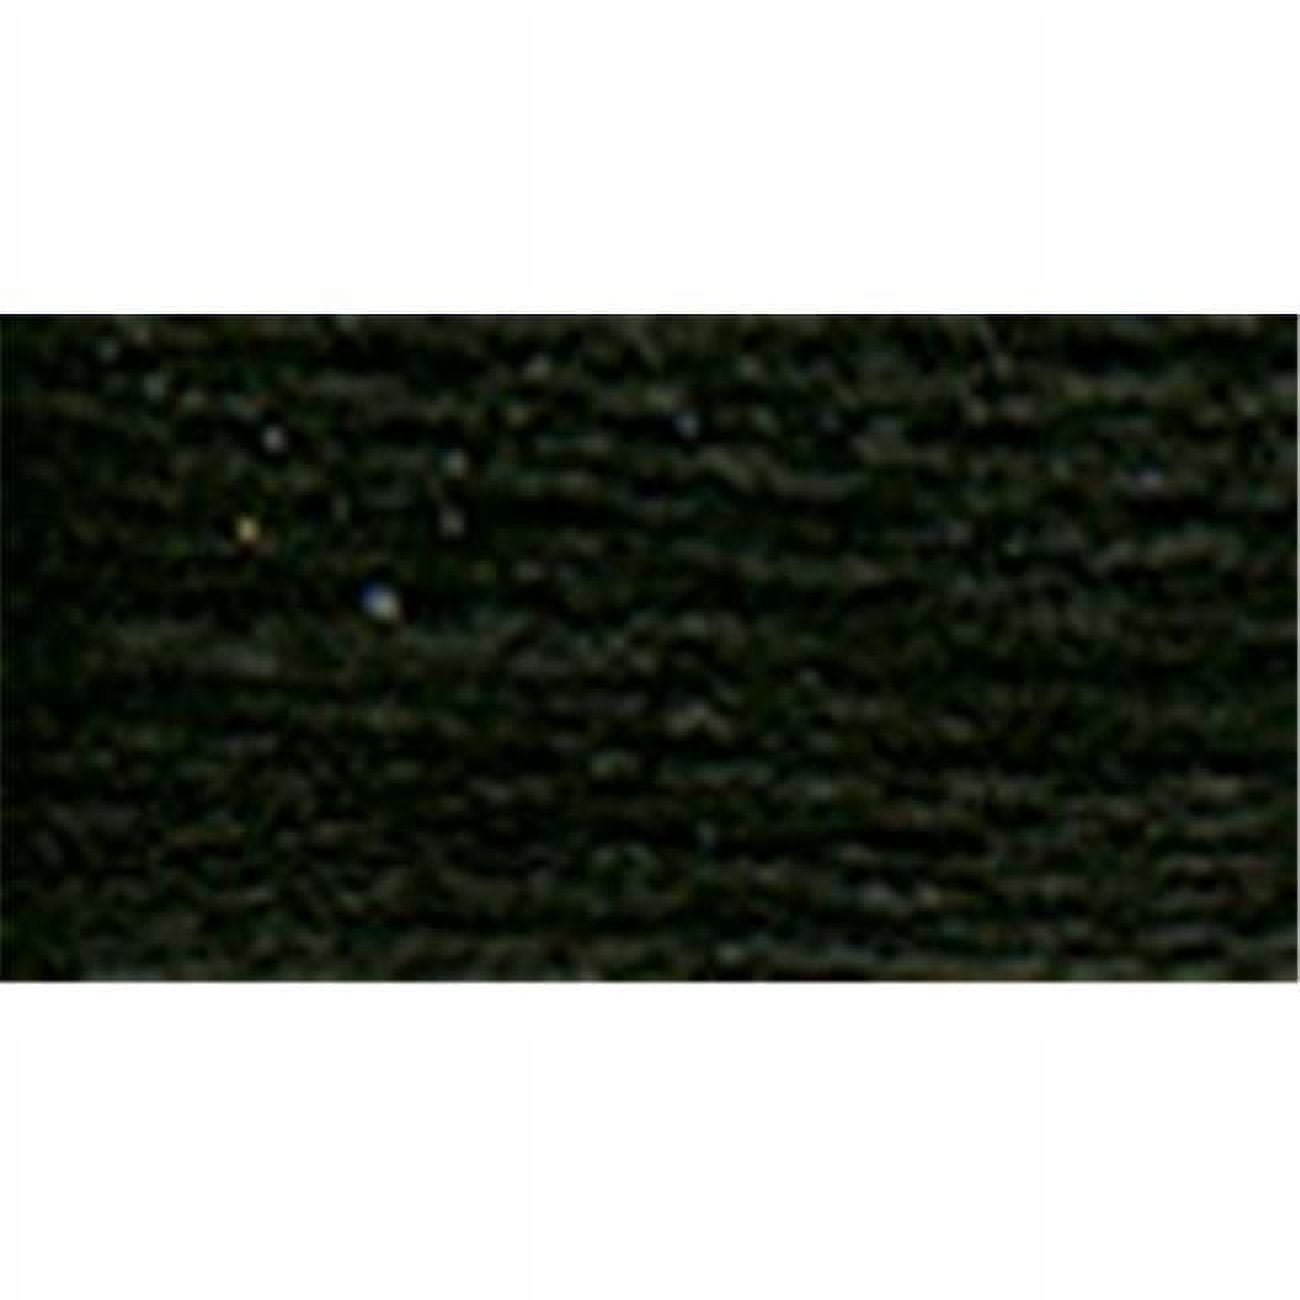 DMC Black Embroidery Floss 6 Strand Cotton Black Thread 12/Pack Bundle  with1Skein of Each DMC Black Brown and DMC Black Avocado with a Set of DMC  Cross Stitch Needles Black Premium String/Yarn